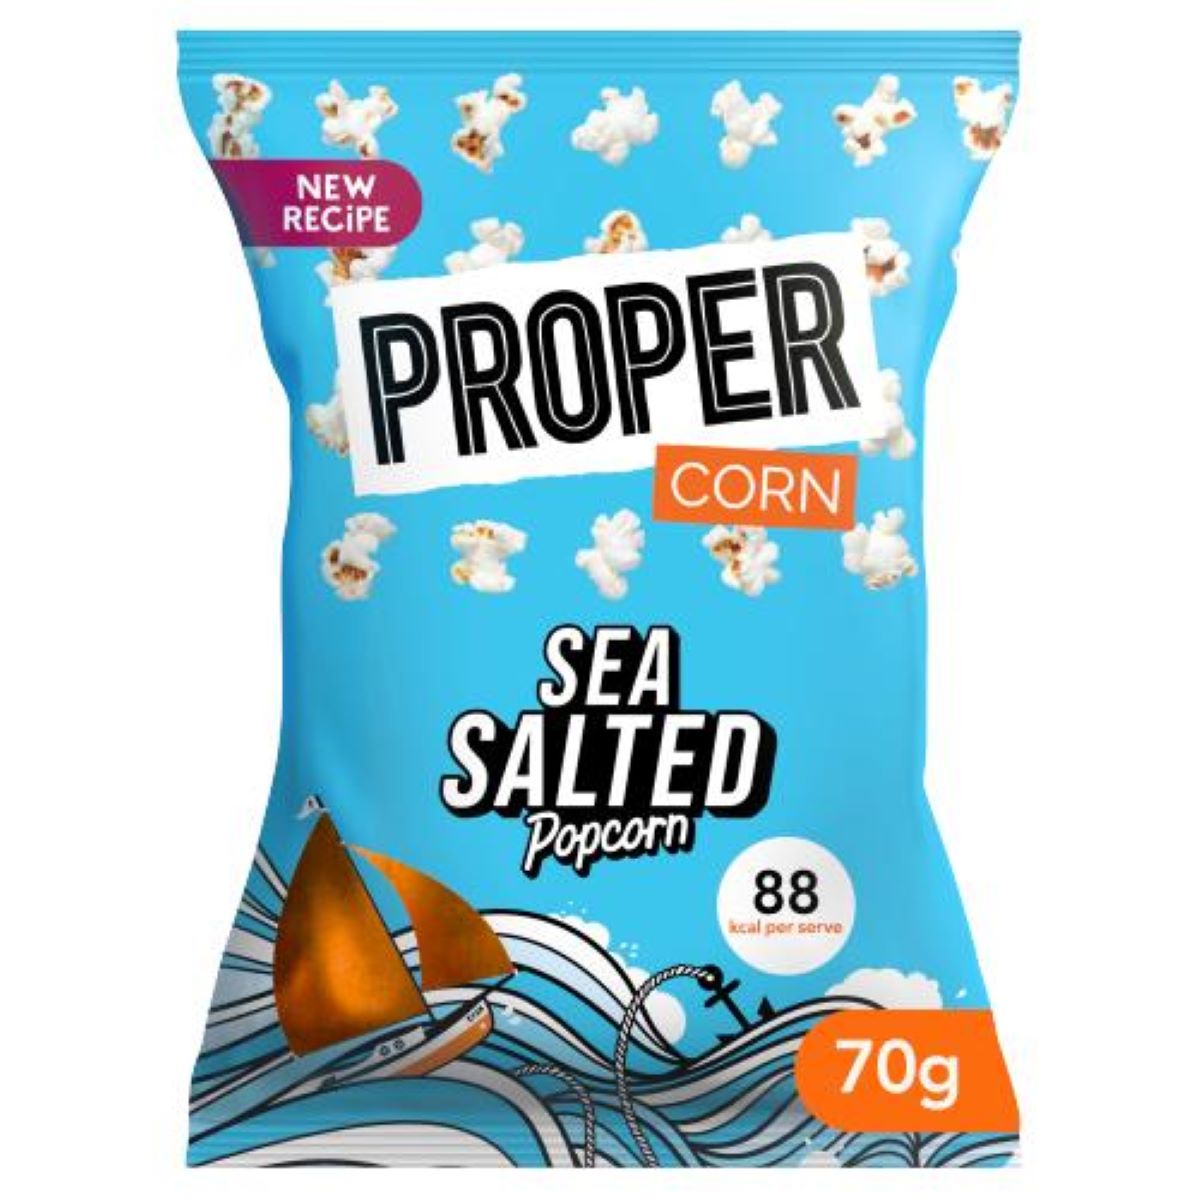 Proper Corn Sea Salted Popcorn 70g